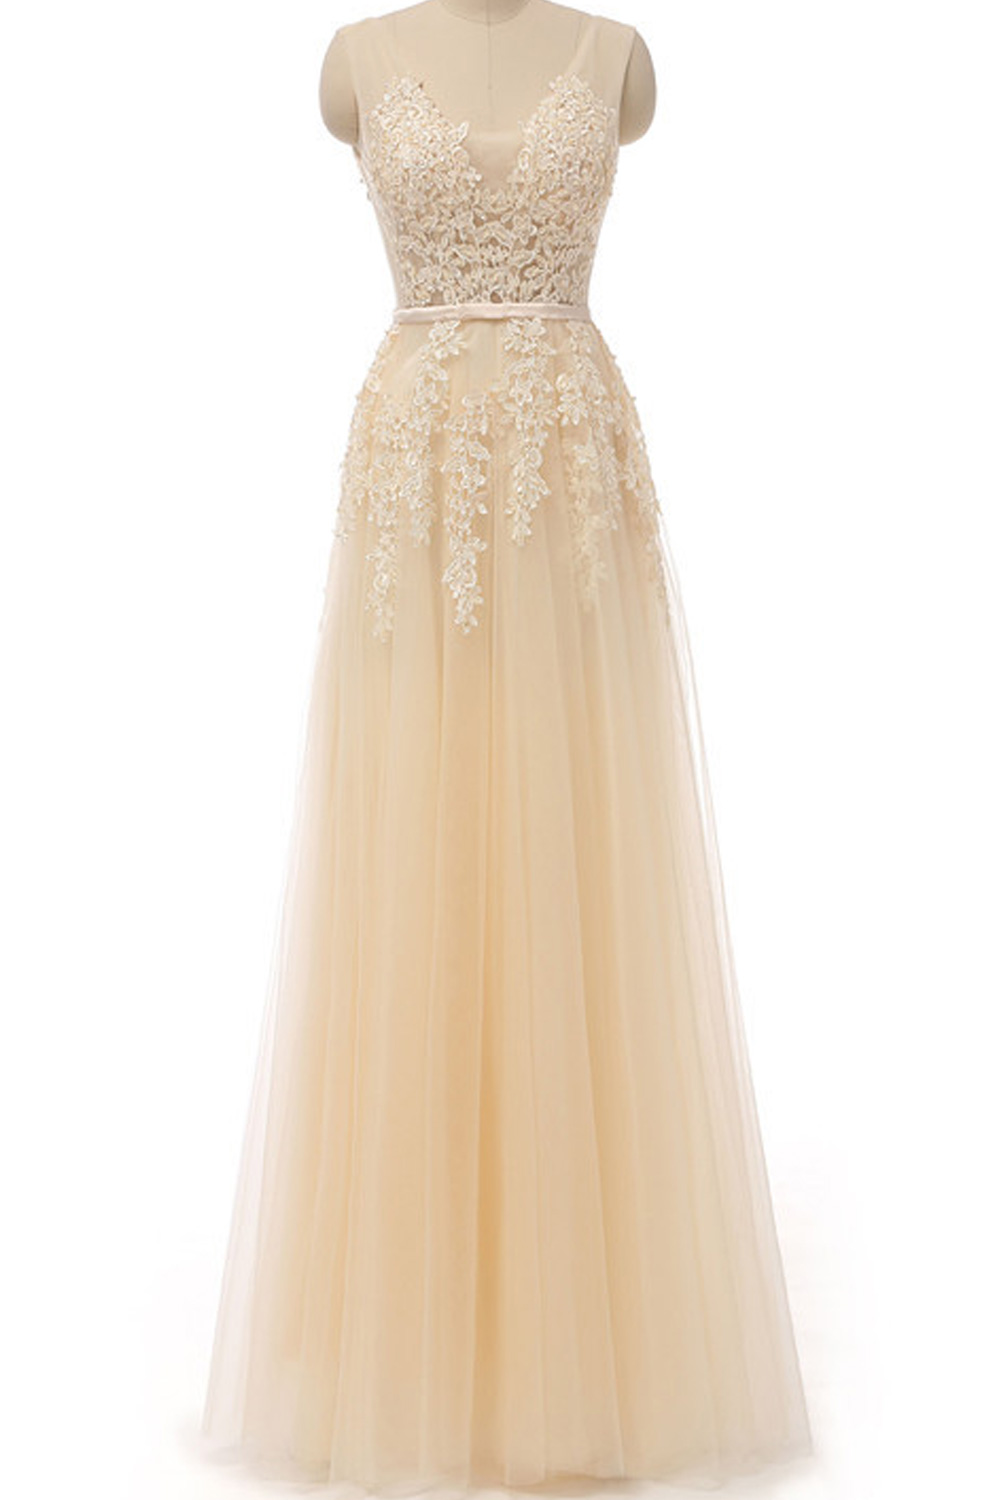 ZaraBeez Women Deep V-Neck Style Sleeveless Solid Colored Elegant Wedding Dress